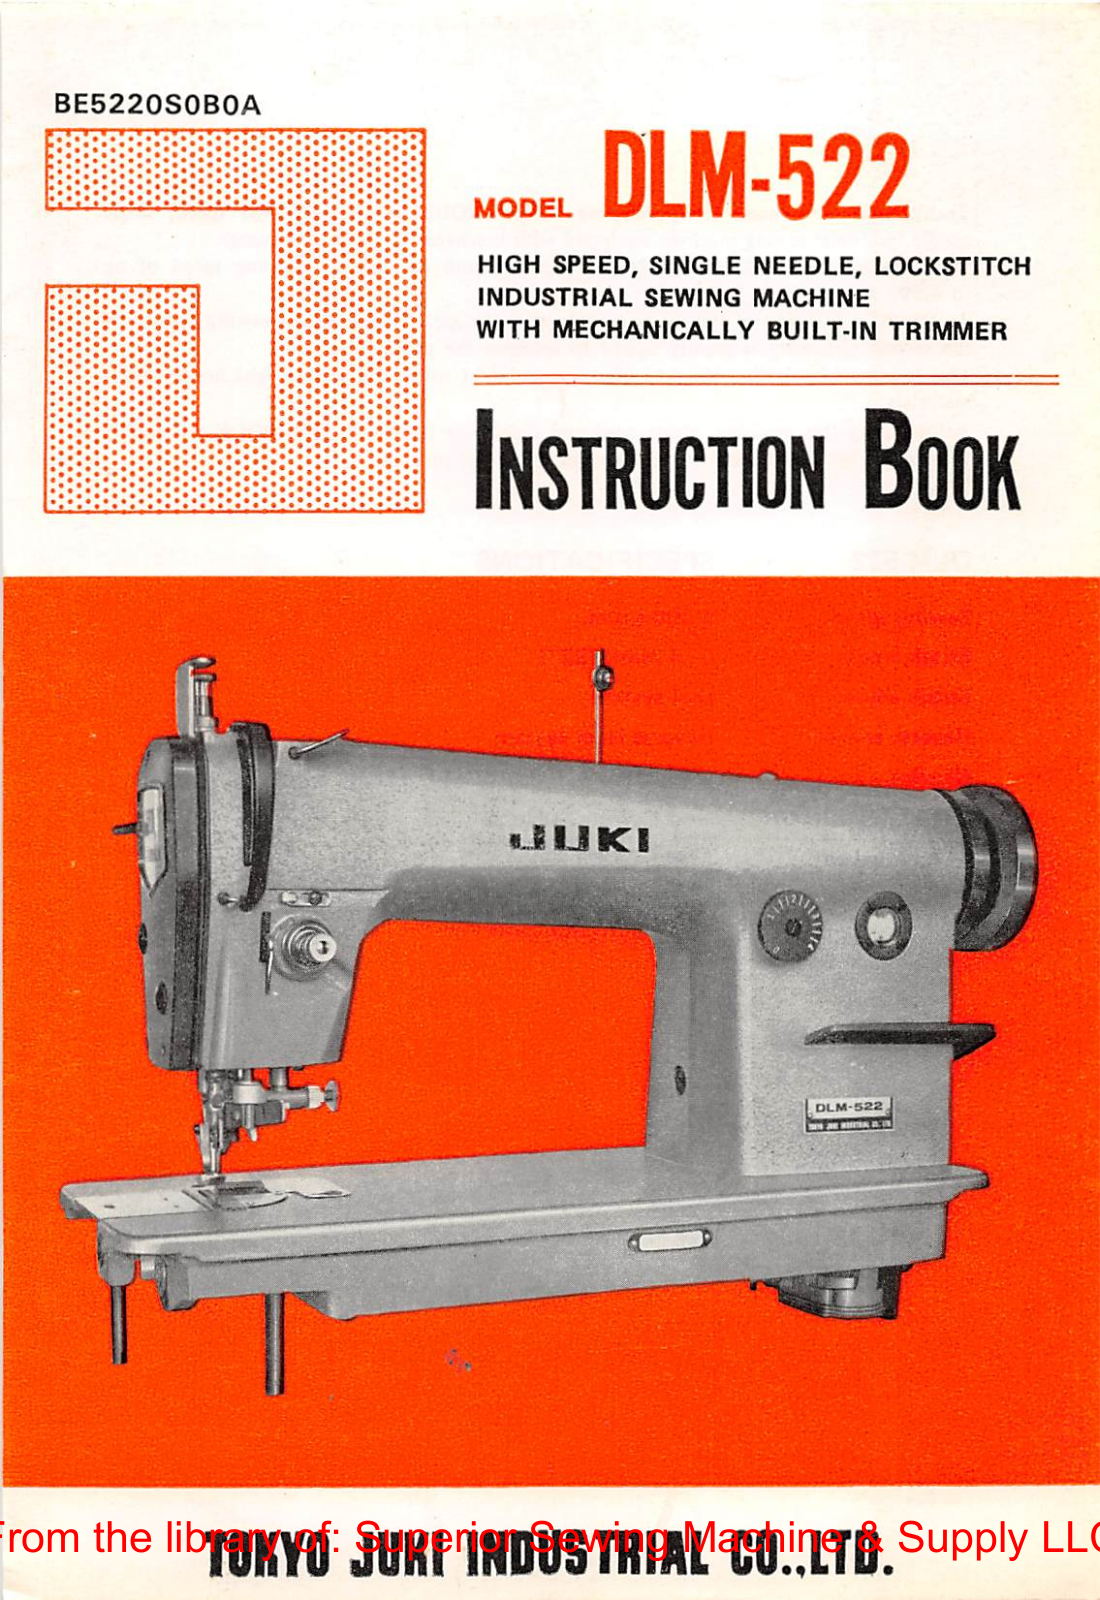 Juki DLM-522 Instruction Manual